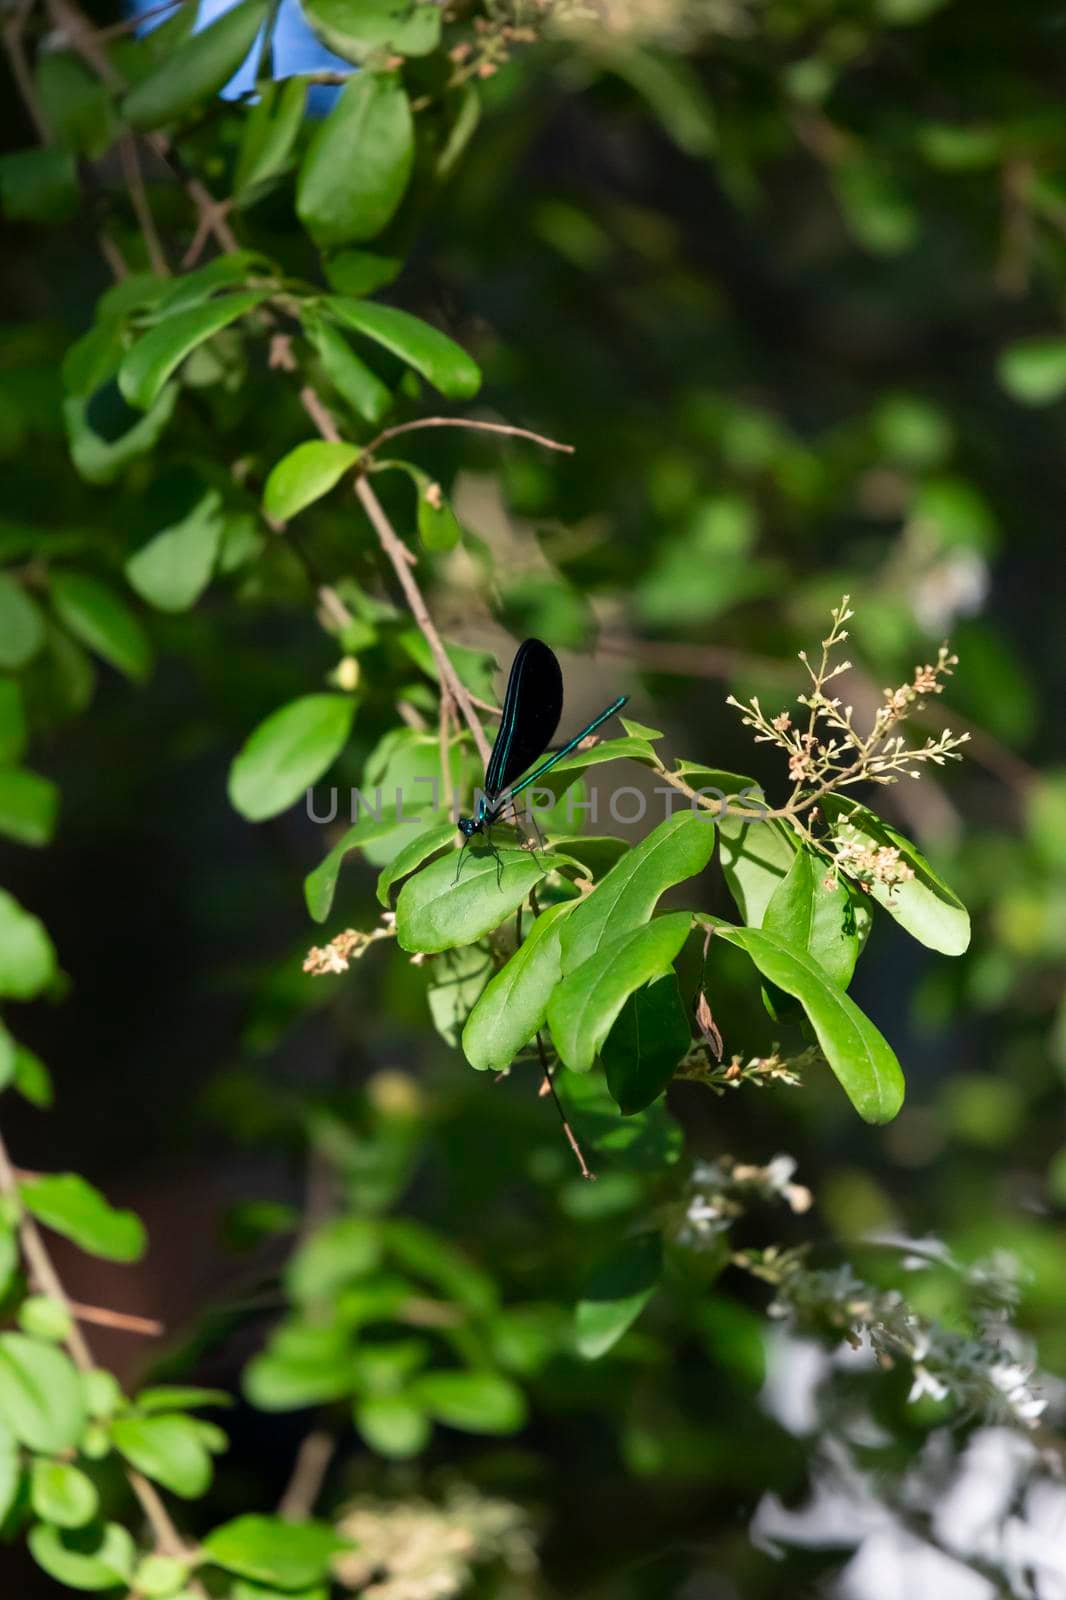 Ebony jewelwings (Calopteryx maculata) perched on a bush limb